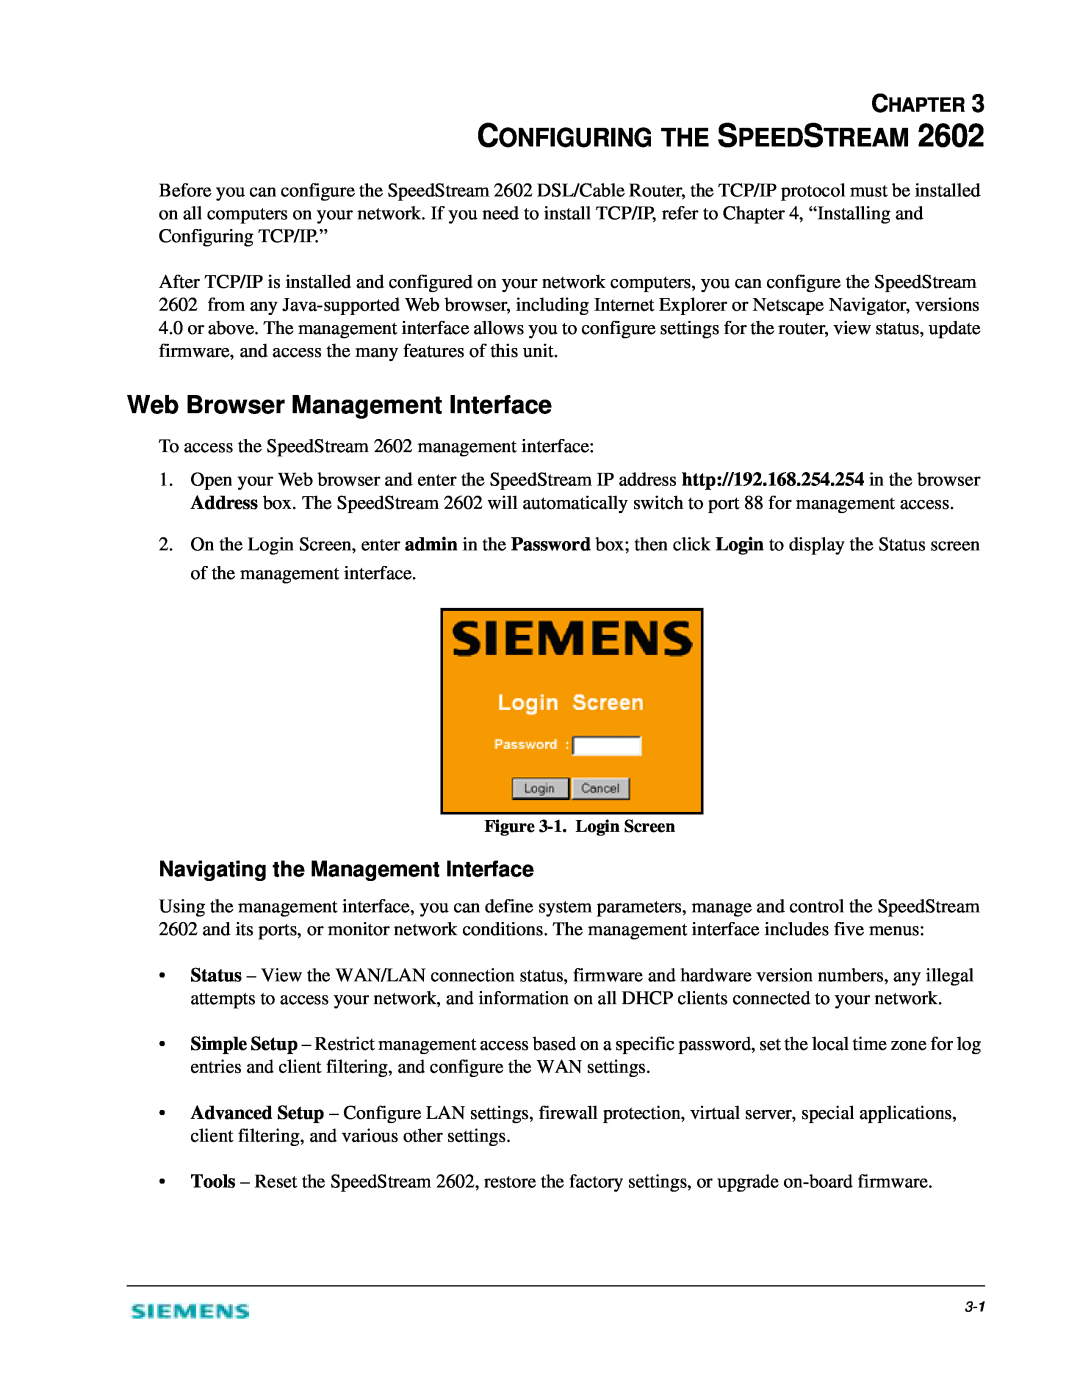 Siemens 2602 Configuring The Speedstream, Web Browser Management Interface, Navigating the Management Interface, Chapter 